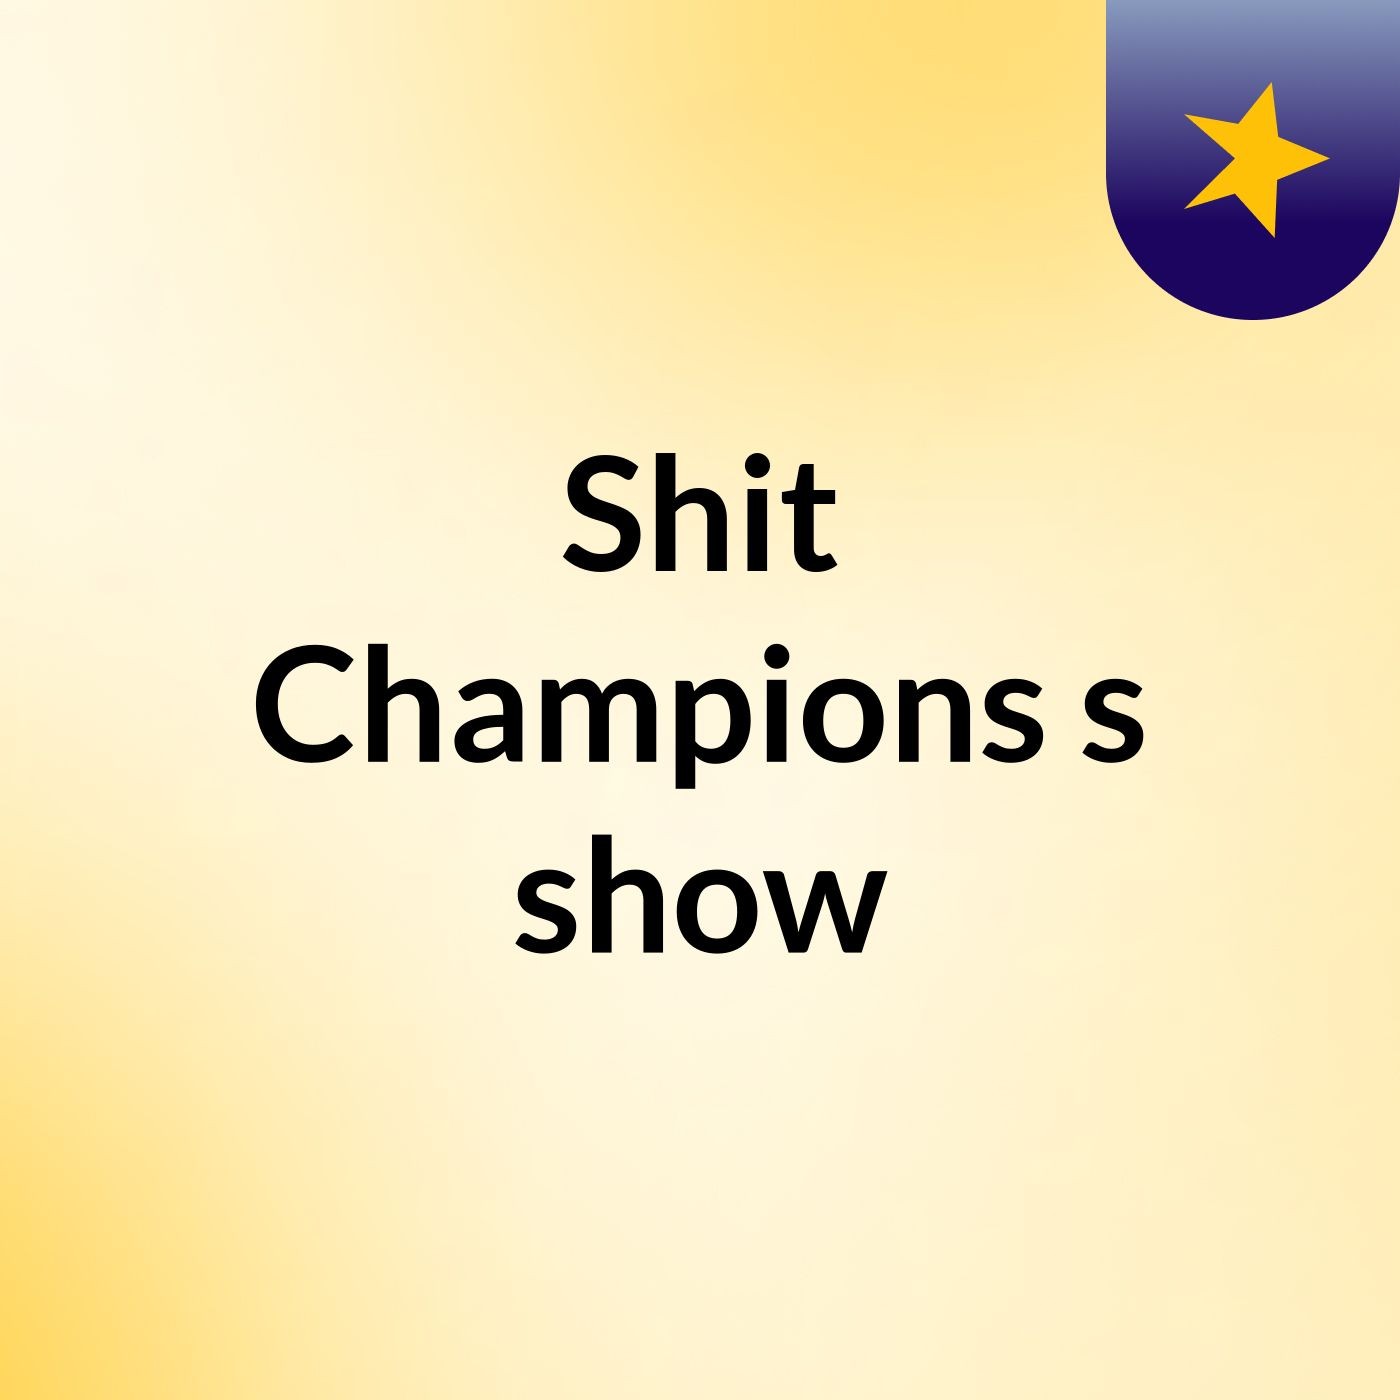 Shit Champions's show